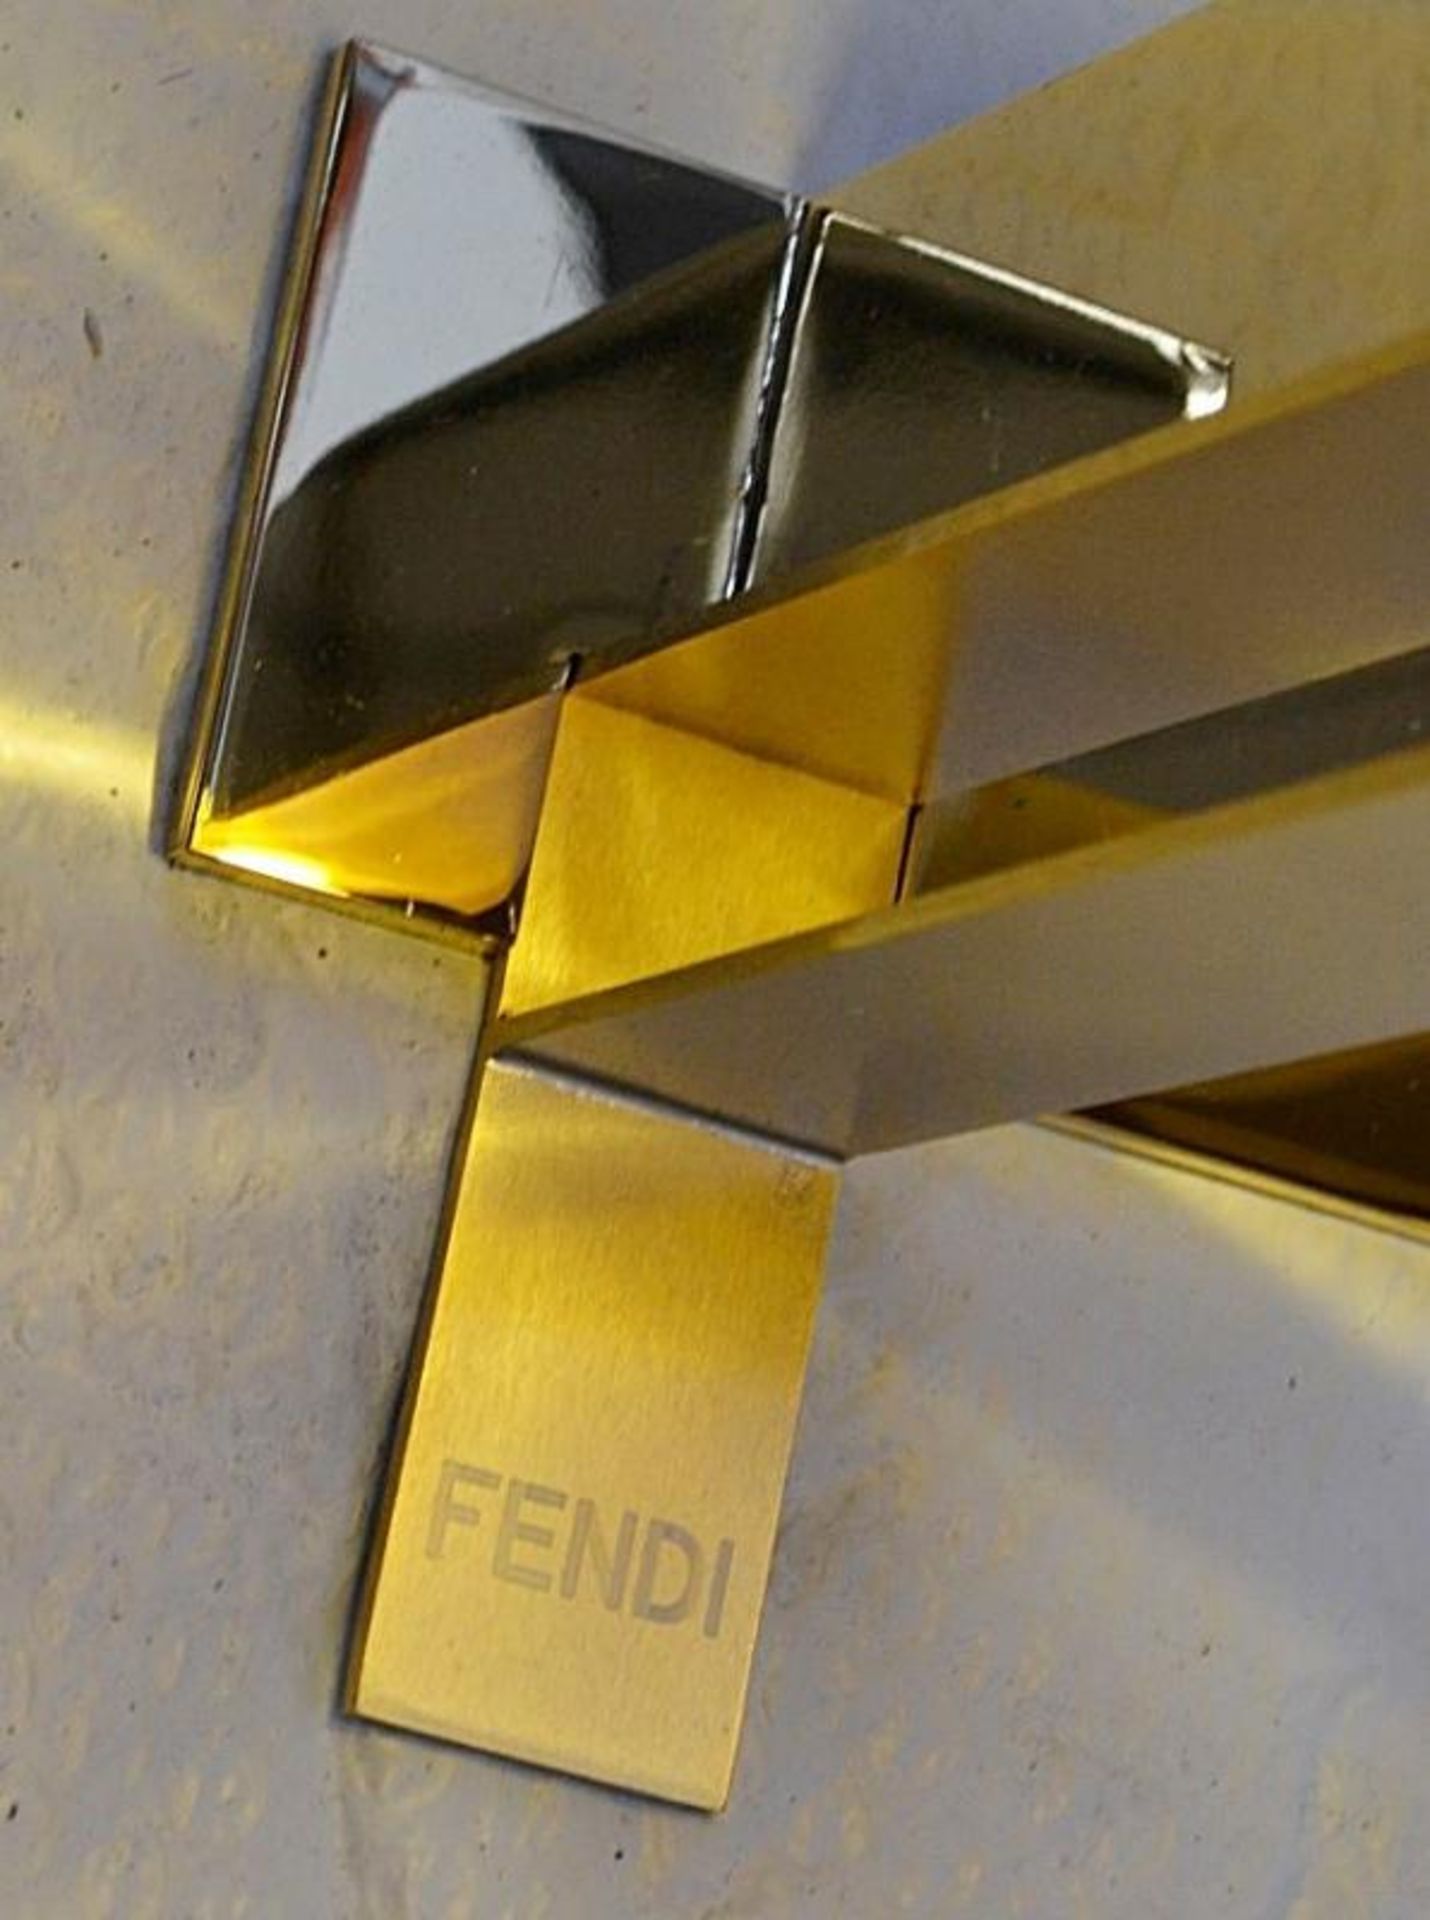 1 x FENDI CASA Chiara Bedside Lamp in Gold - Dimensions: H74 x W16 x D16cm - Ref: 4822331B - CL087 - - Image 4 of 14